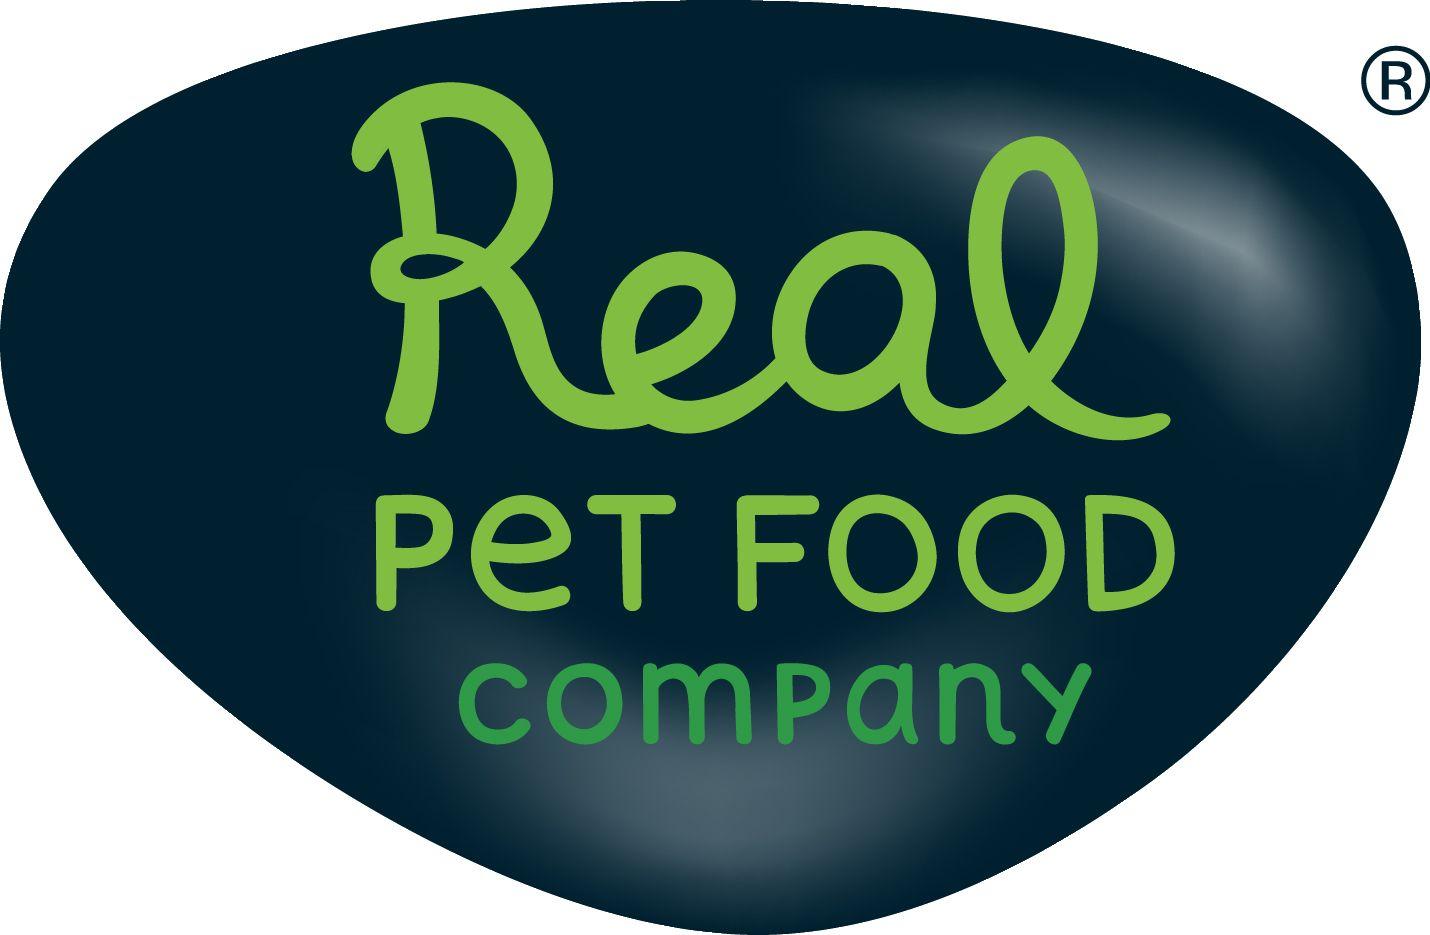 Пет фуд. Food Company. Pets food Company. Логотип фуд Компани. Логотип еды для собак.